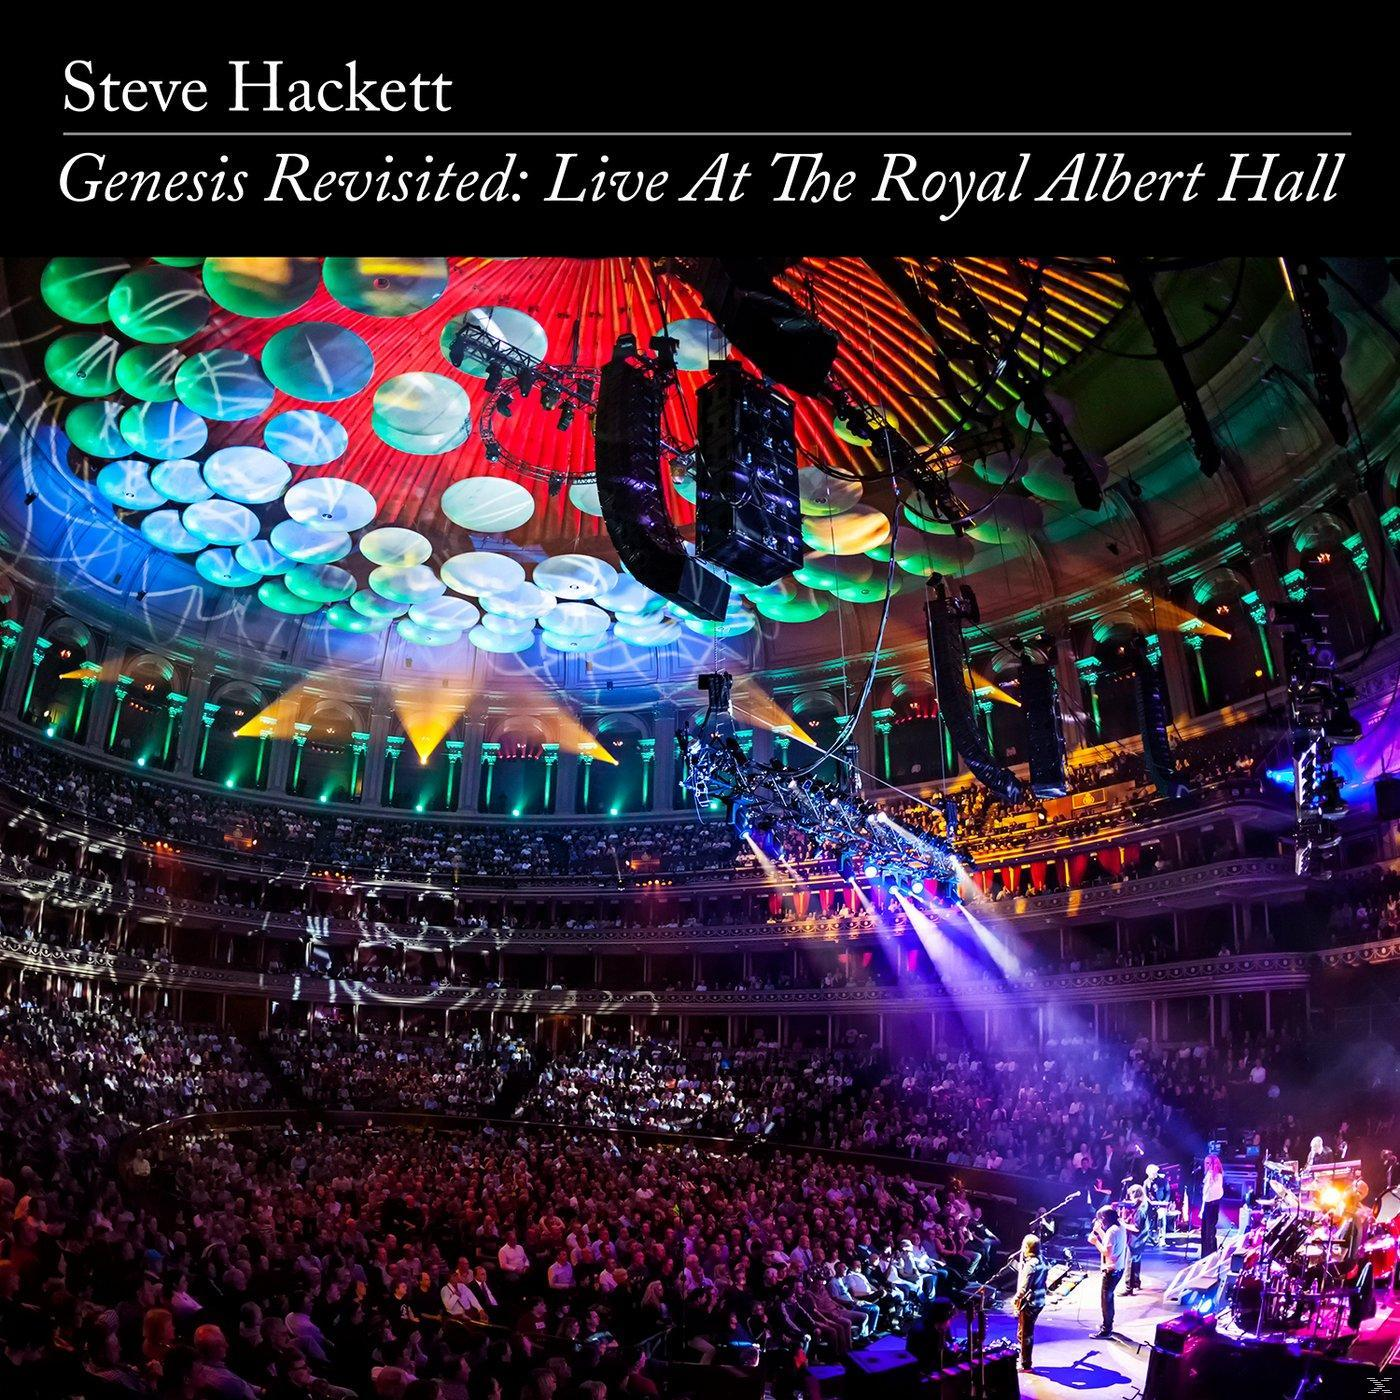 Steve Hackett Video) Live DVD (CD + Royal Genesis - The Revisited: Albert At - Hall